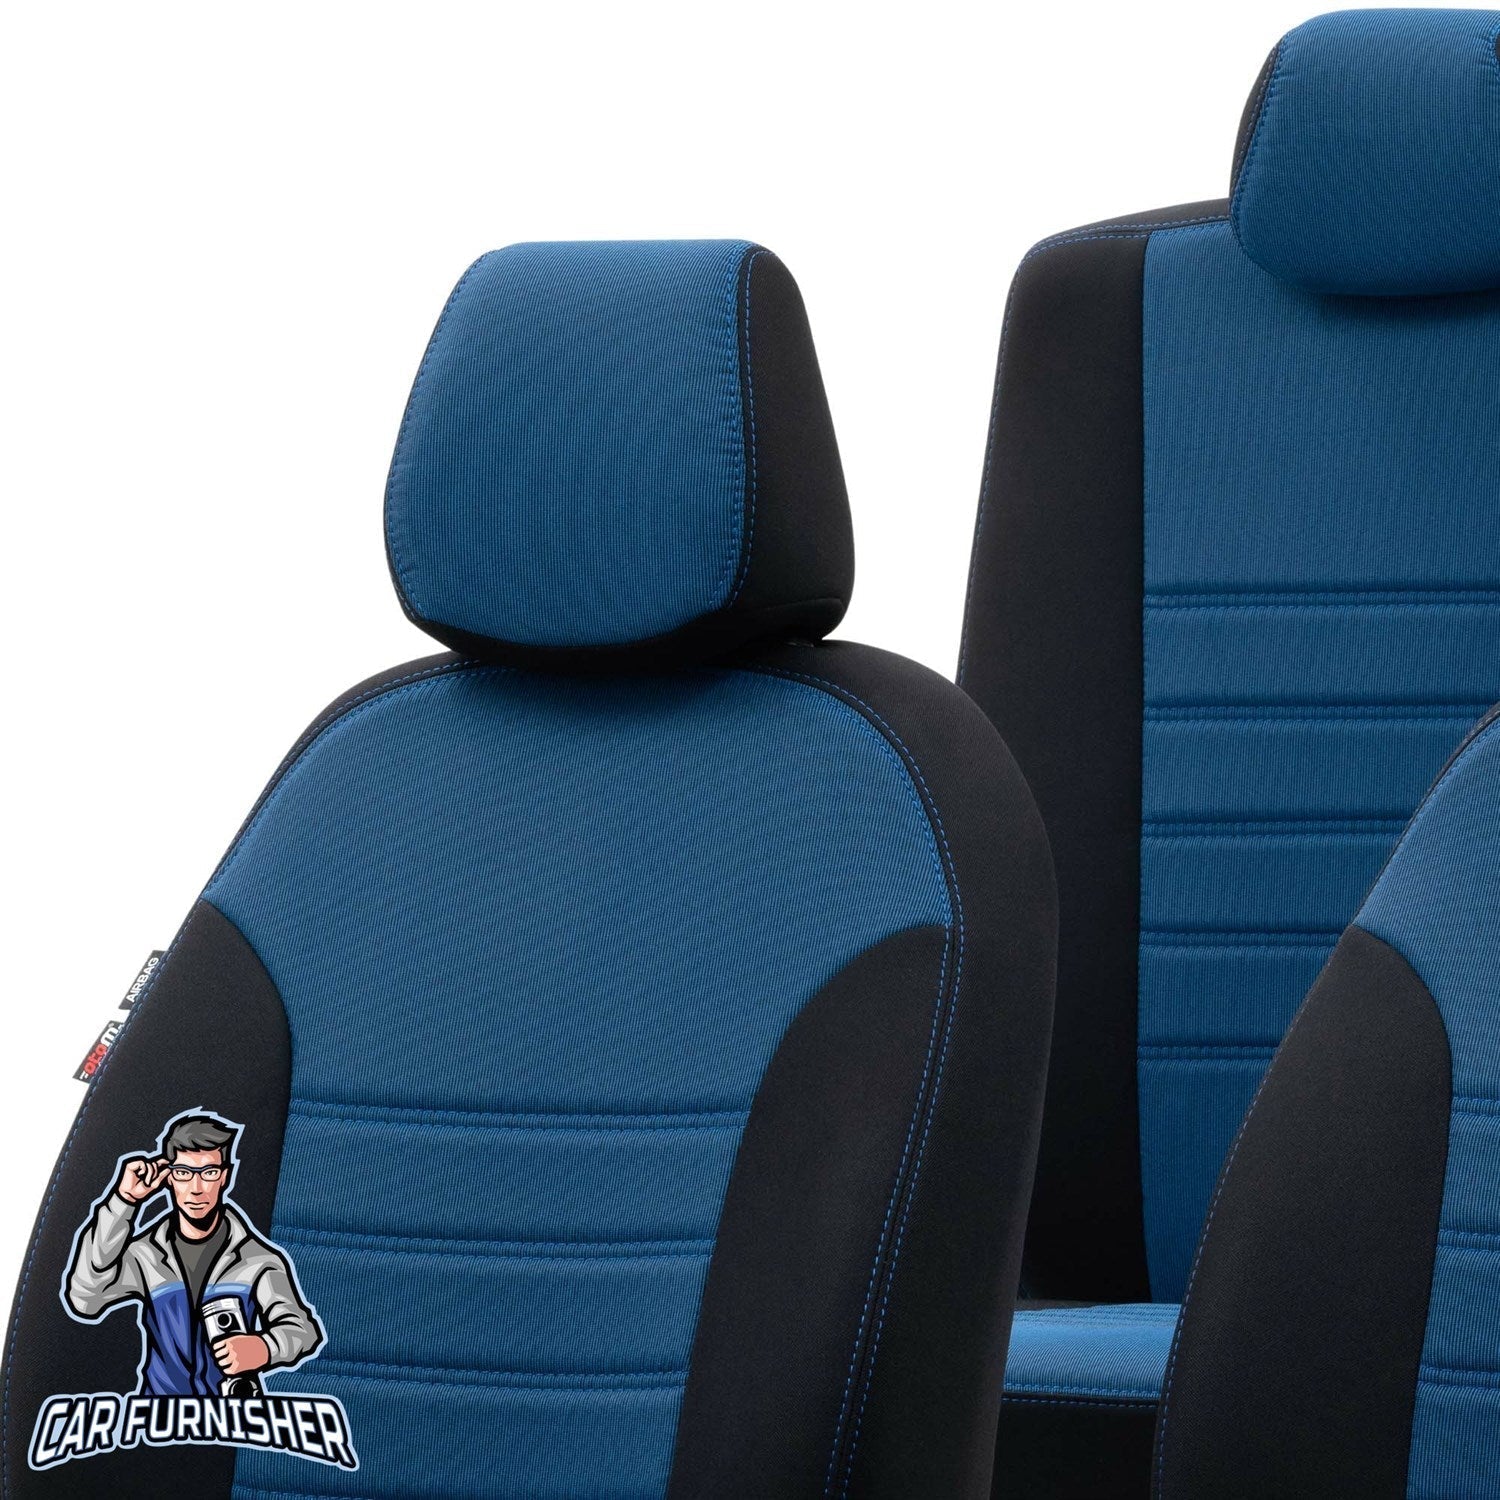 Opel Frontera Seat Cover Original Jacquard Design Blue Jacquard Fabric